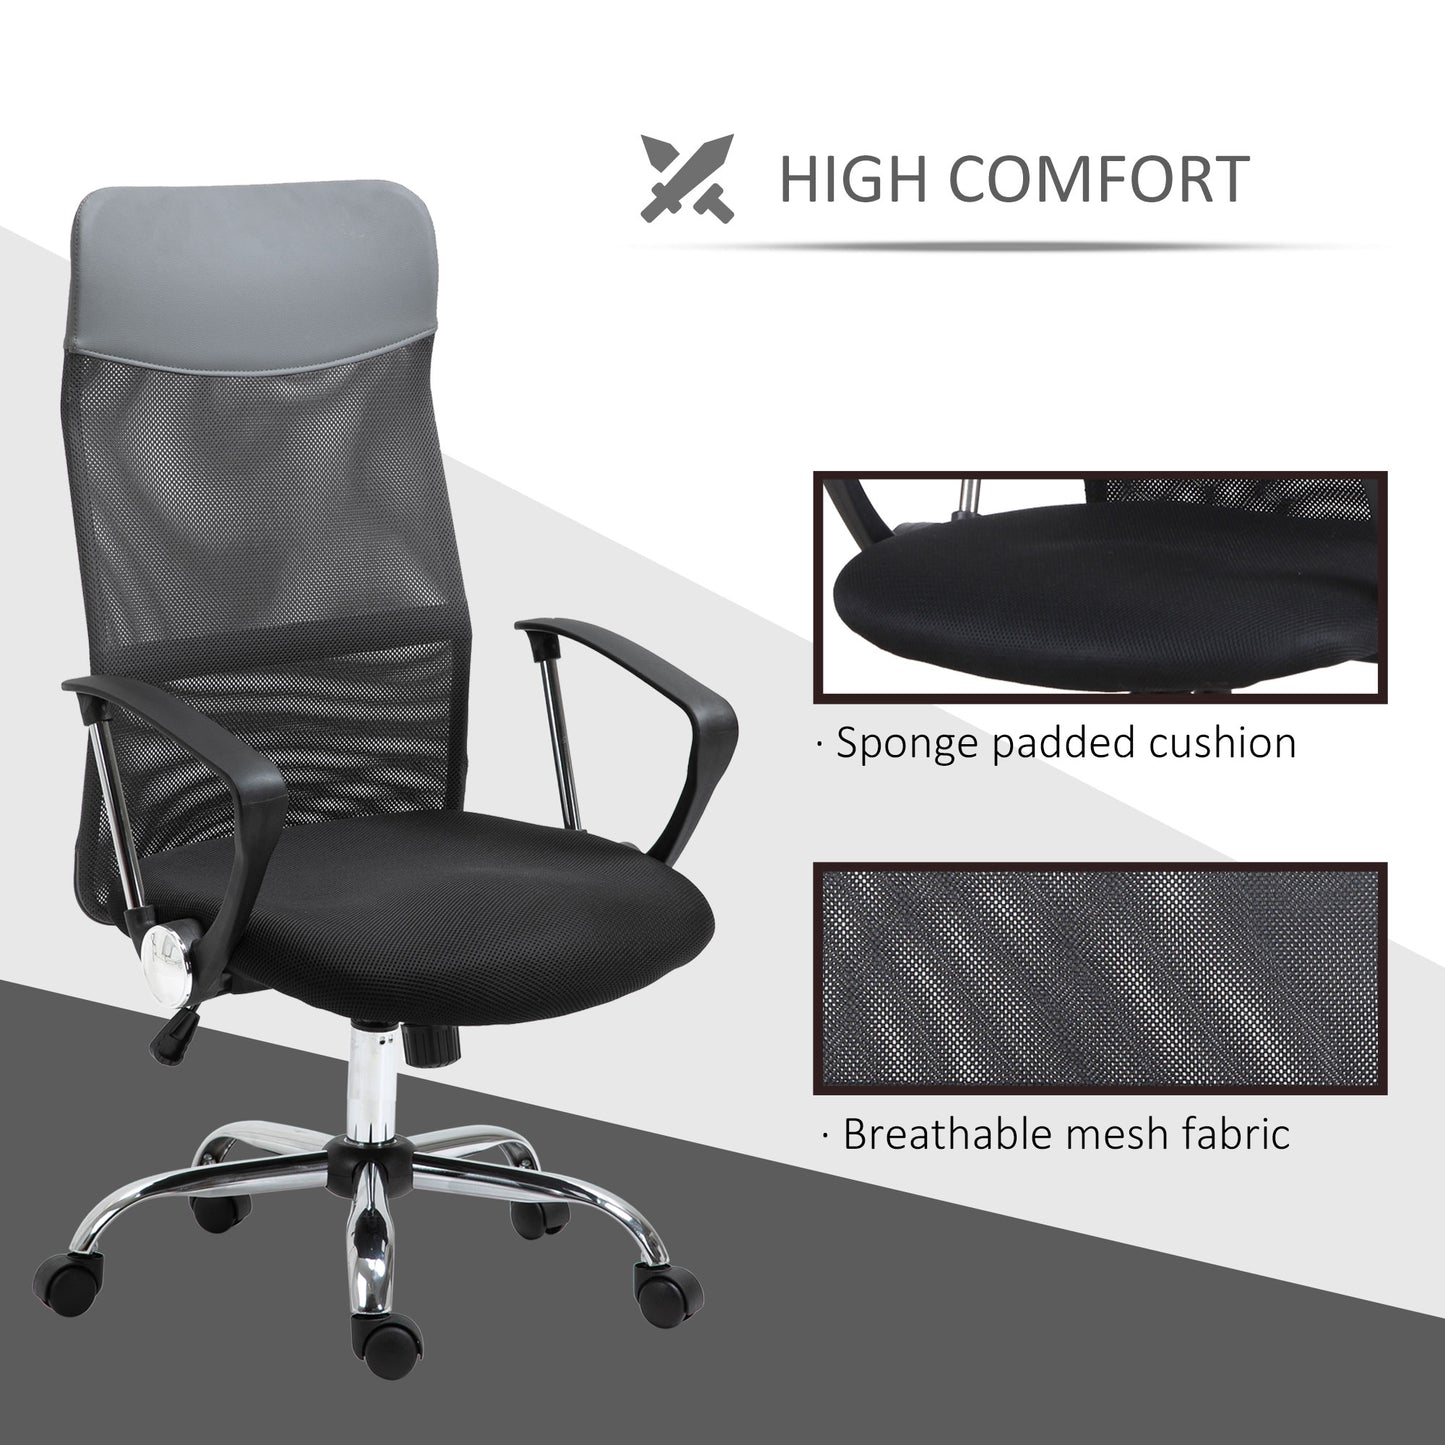 HOMCOM Executive Office Desk Chair High Back Mesh Chair Seat - Grey